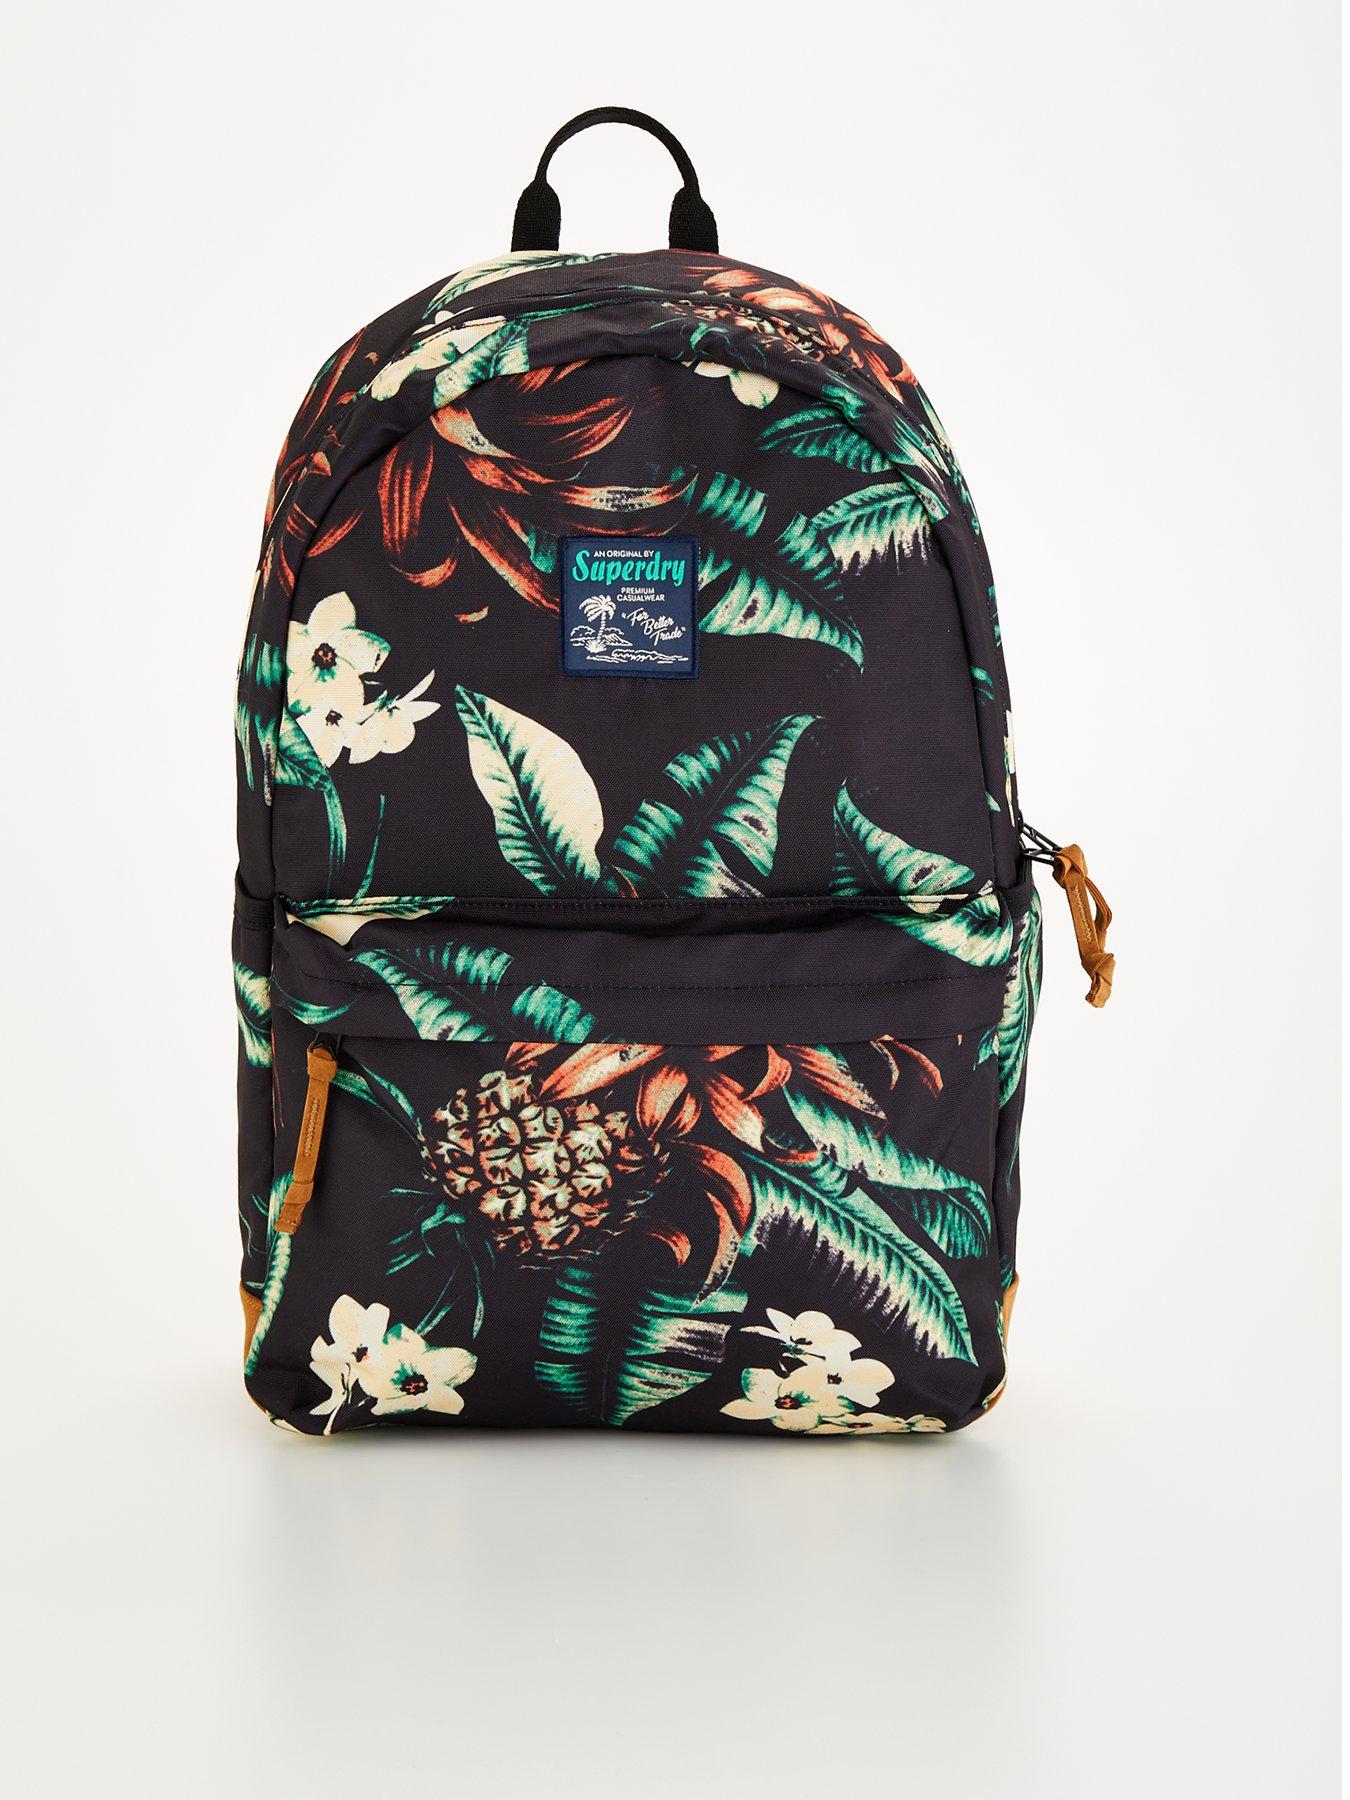 Superdry Bags, Backpacks & Purses | Very.co.uk